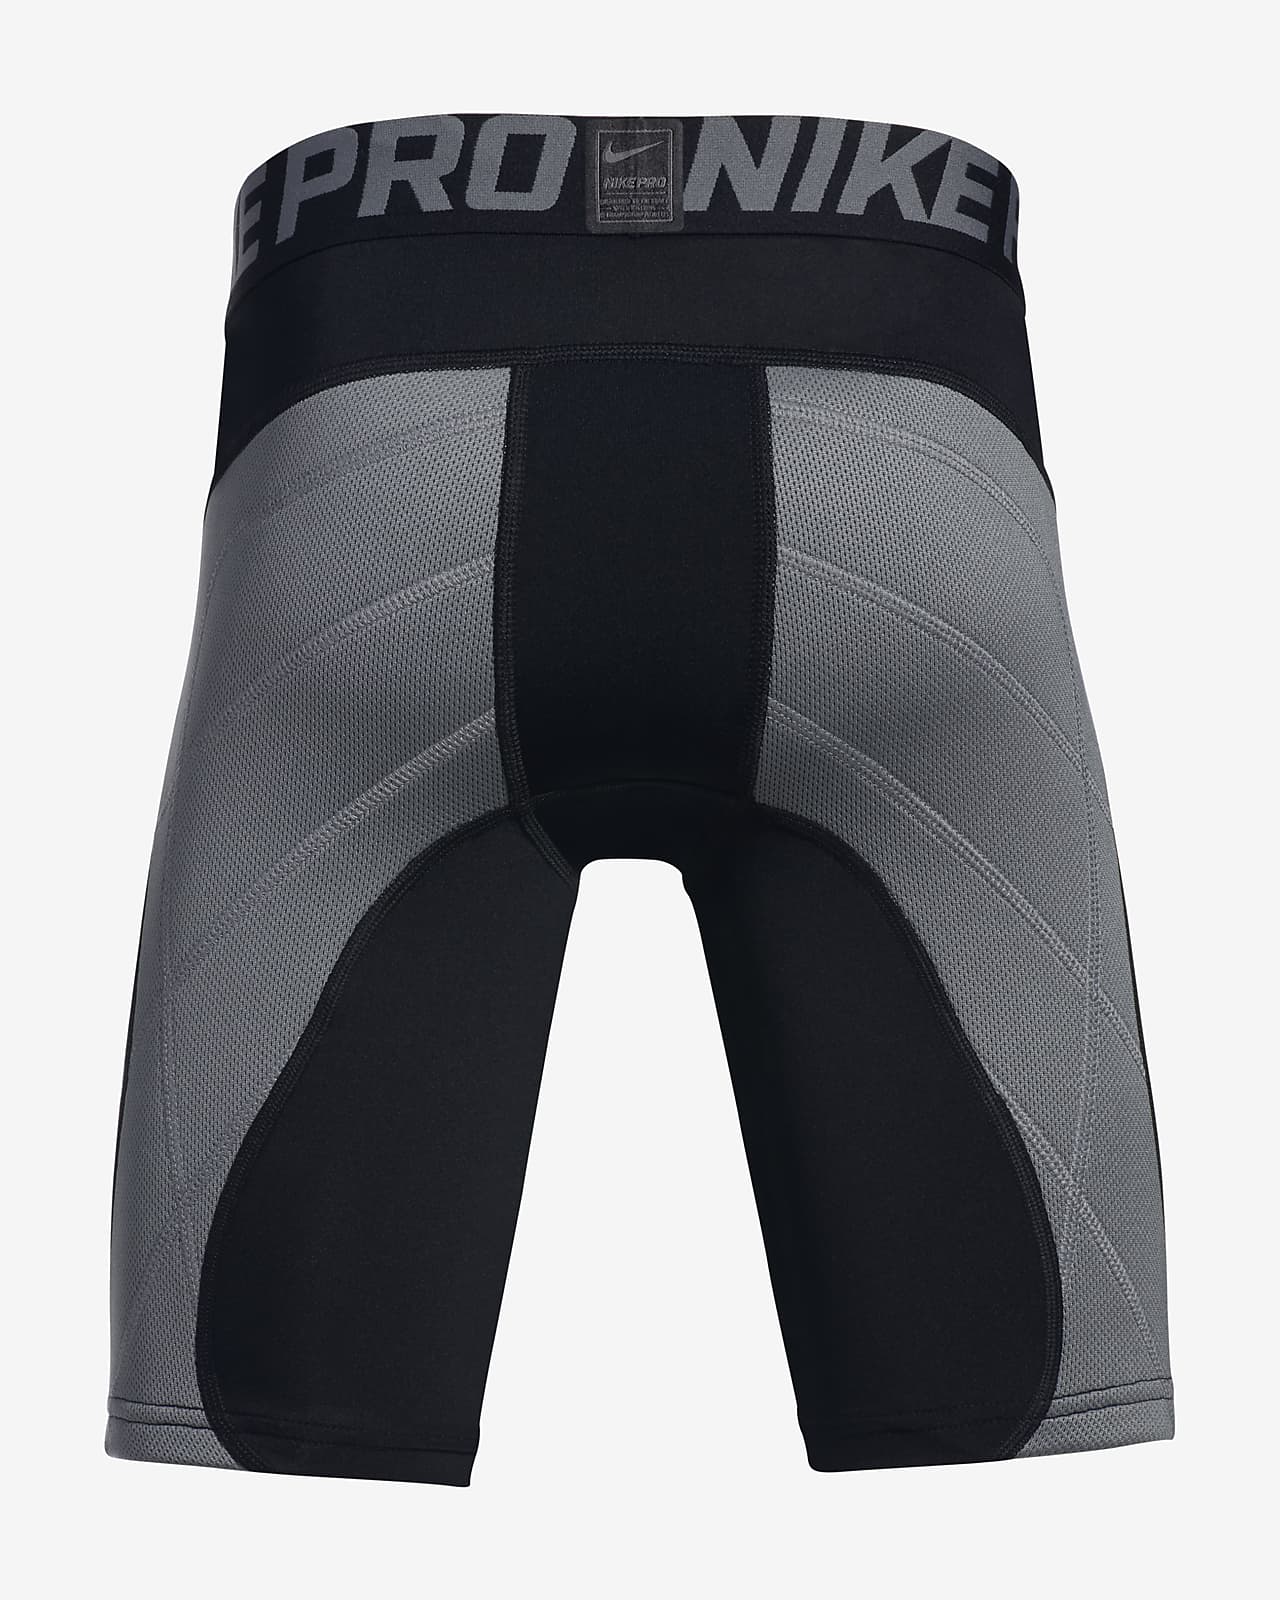 Nike Baseball Sliding Pants Mens Small S Gray Polyester Spandex Capri  Length | eBay